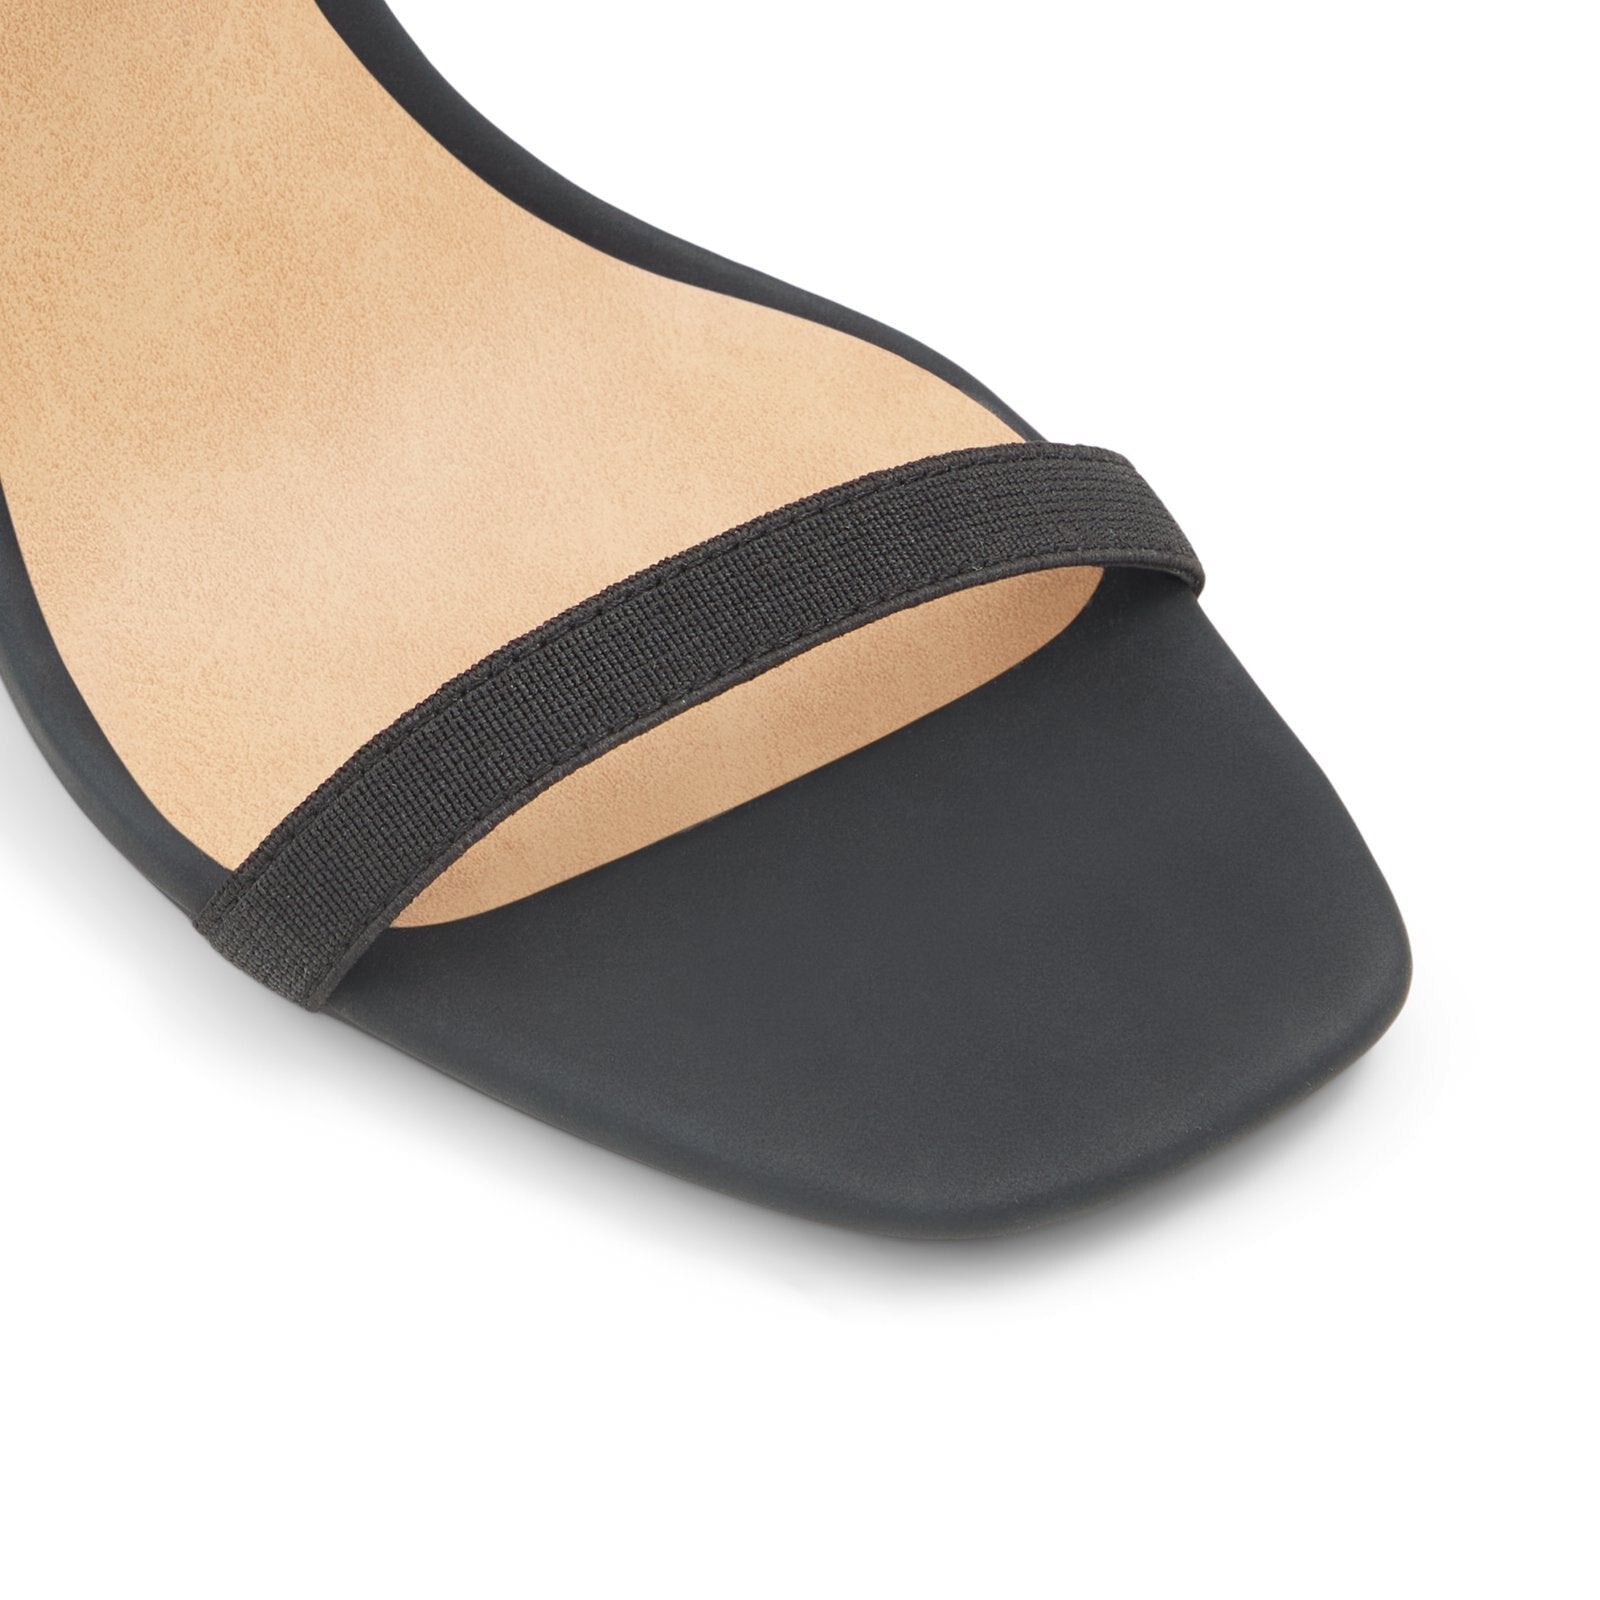 Aeille / Heeled Sandals Women Shoes - BLACK - CALL IT SPRING KSA